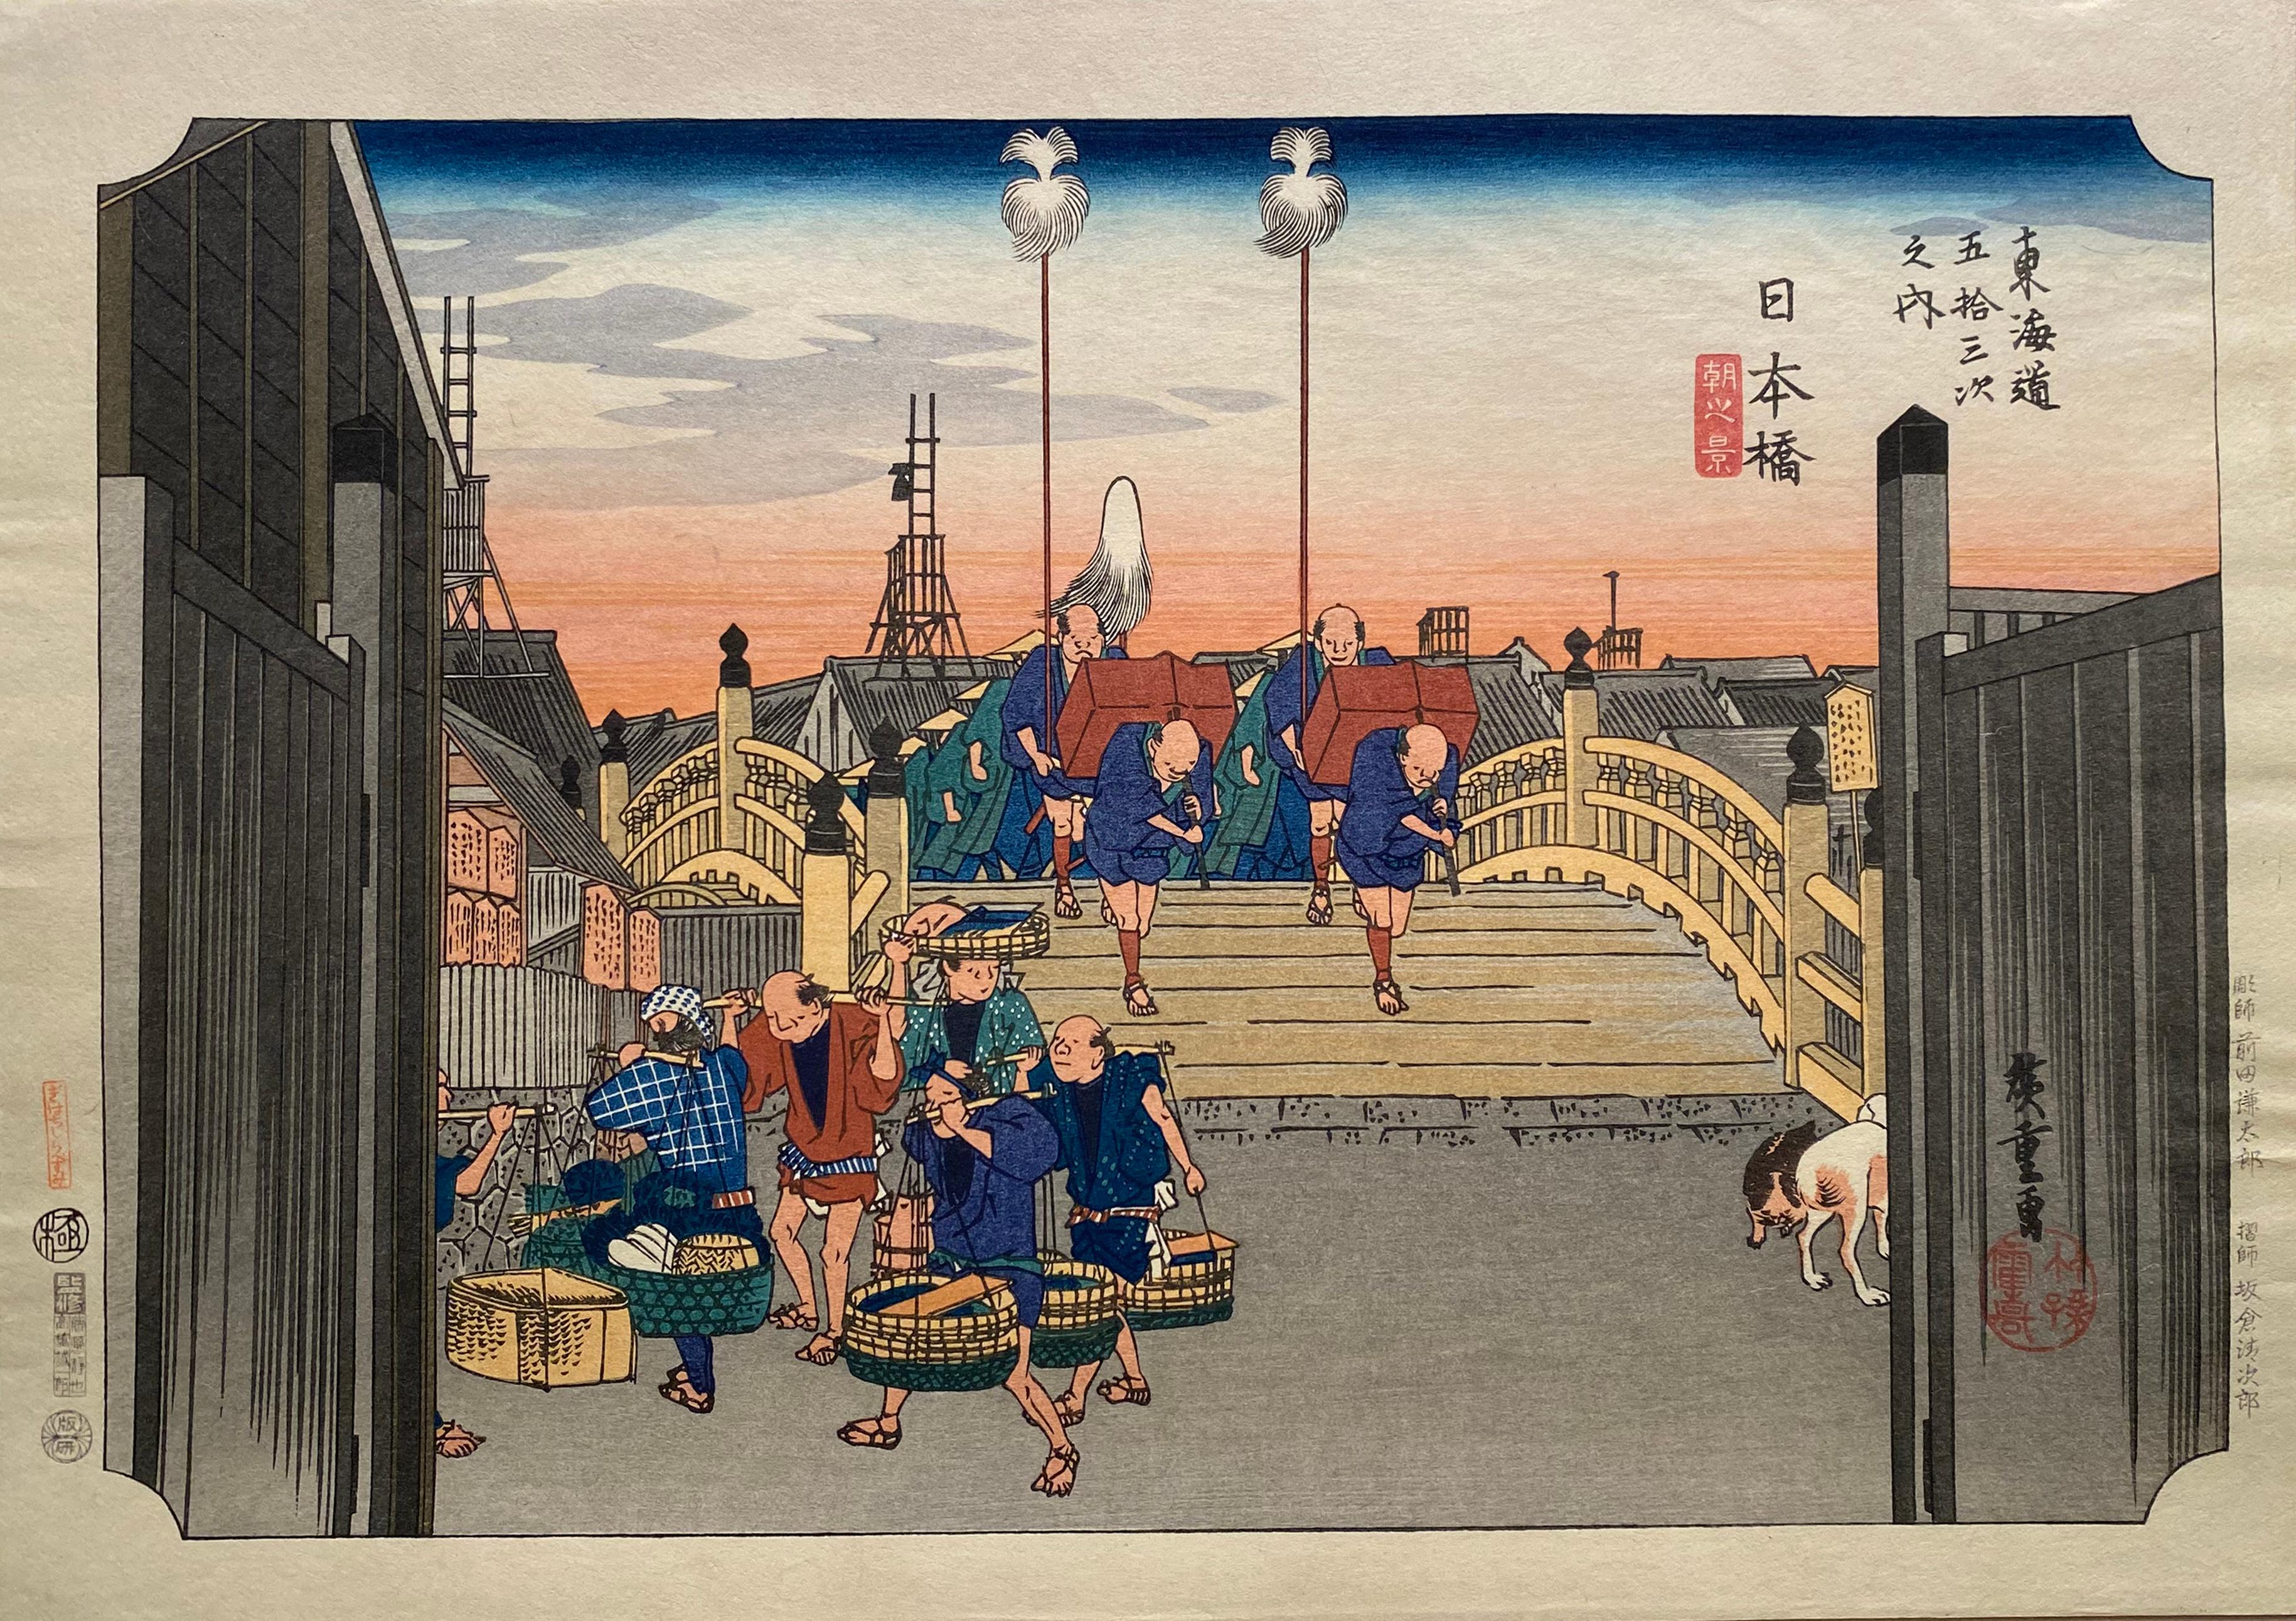 Utagawa Hiroshige (Ando Hiroshige) Landscape Print - 'Nihon-Bashi Station', After Utagawa Hiroshige 歌川廣重, Ukiyo-e Woodblock, Tokaido